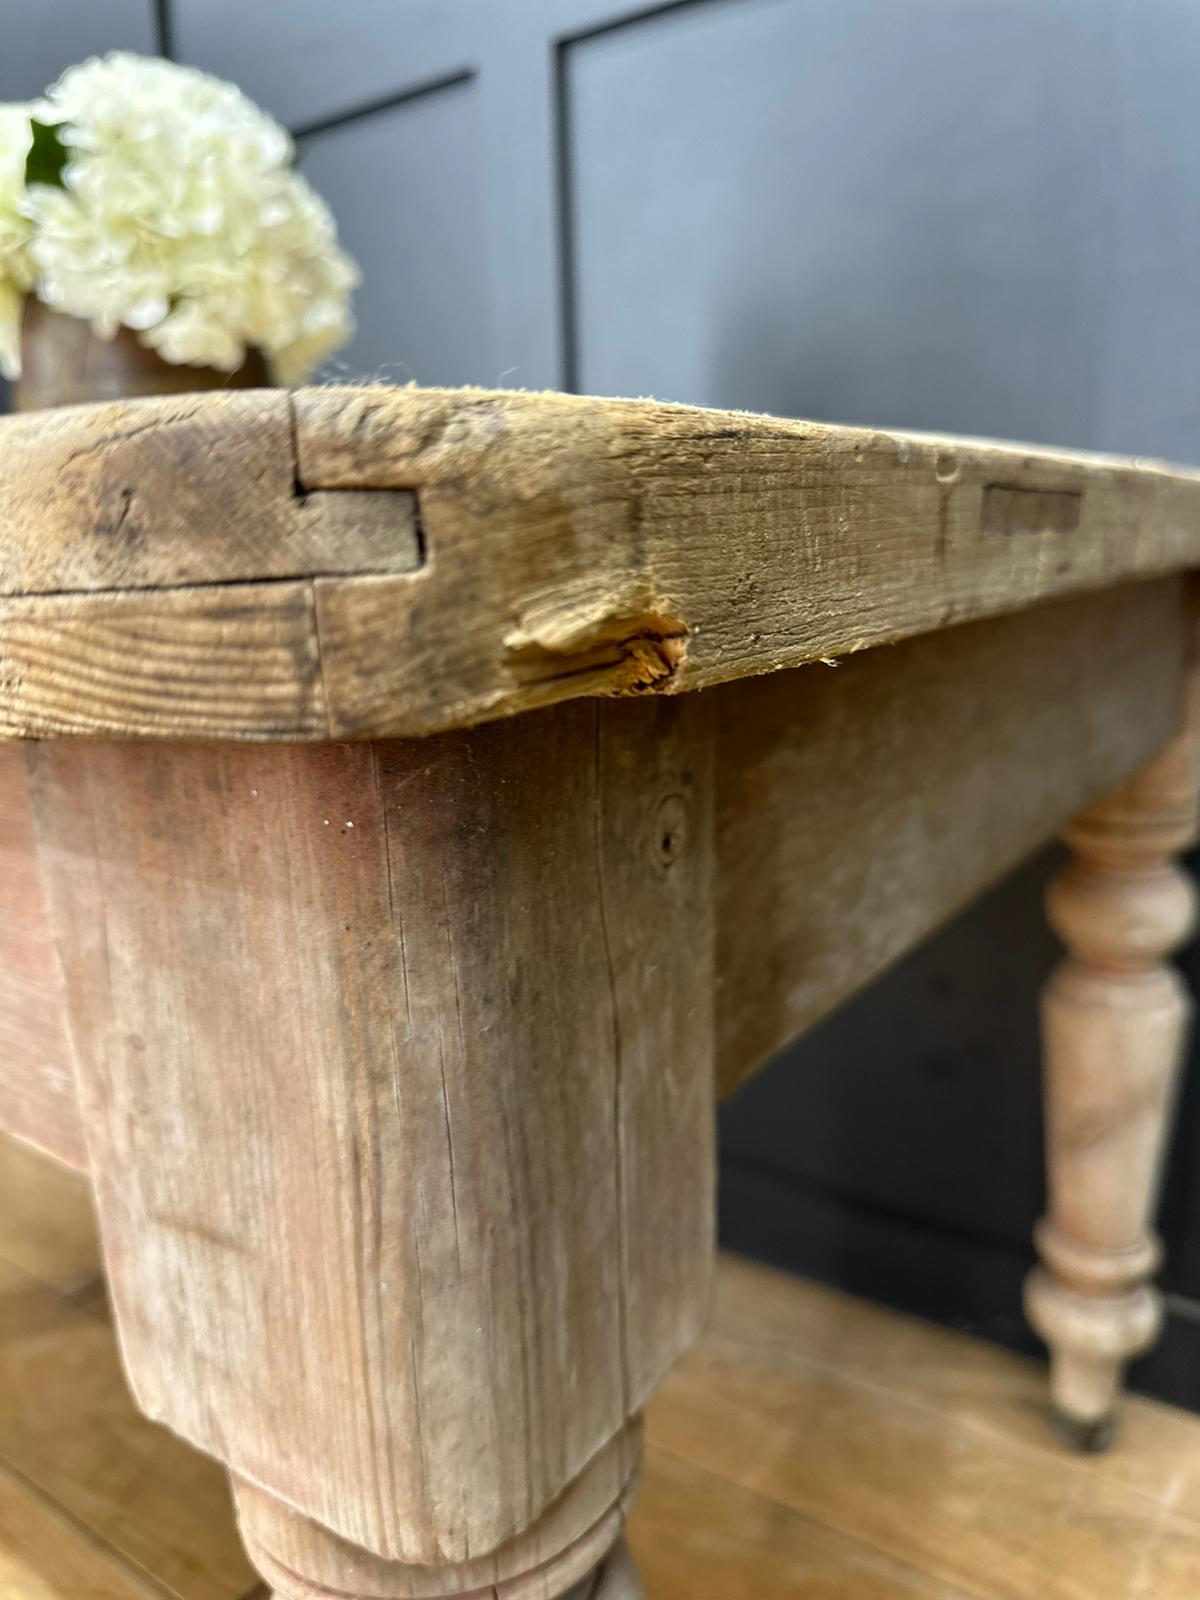 Antique Pine Dining Table  / Kitchen Table / Rustic Farmhouse / Pine Desk